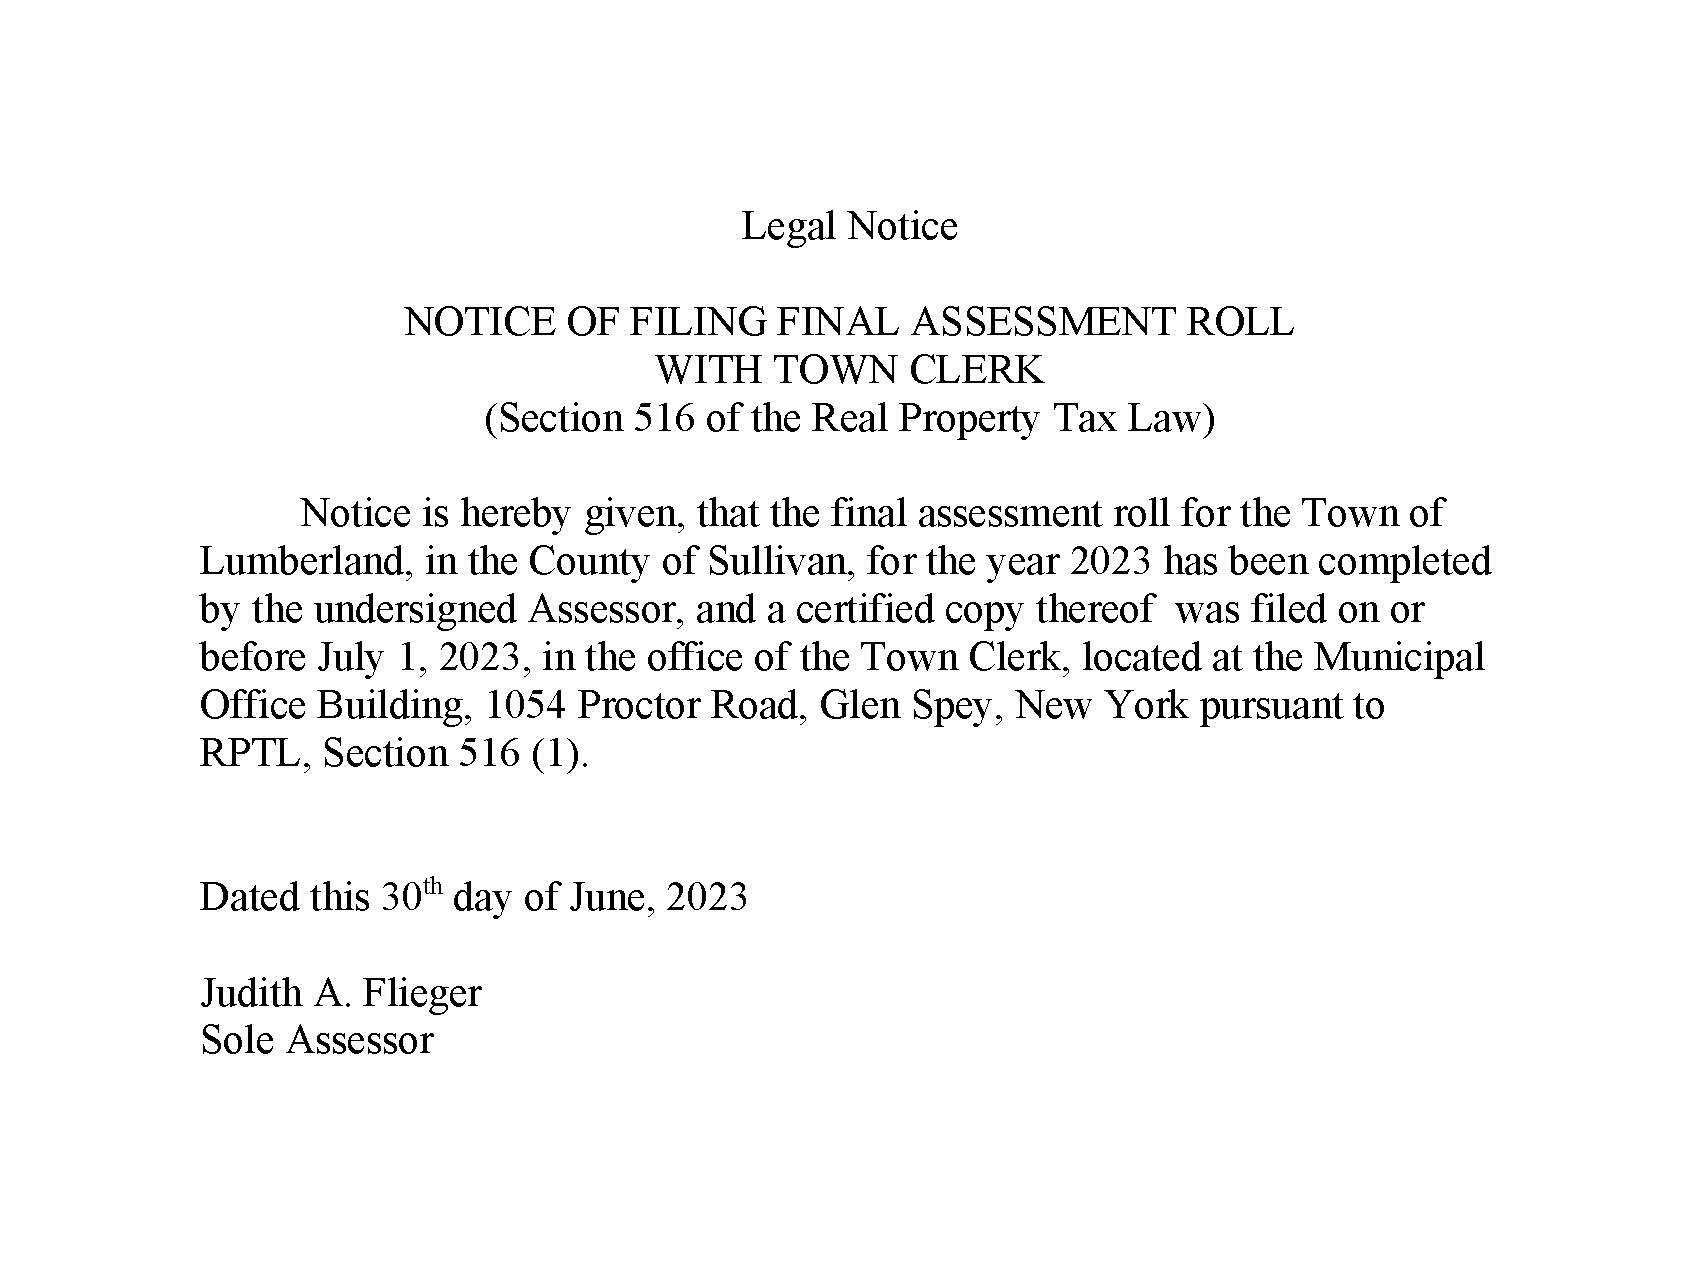 Legal Notice Final Roll 2023 (2) - Copy